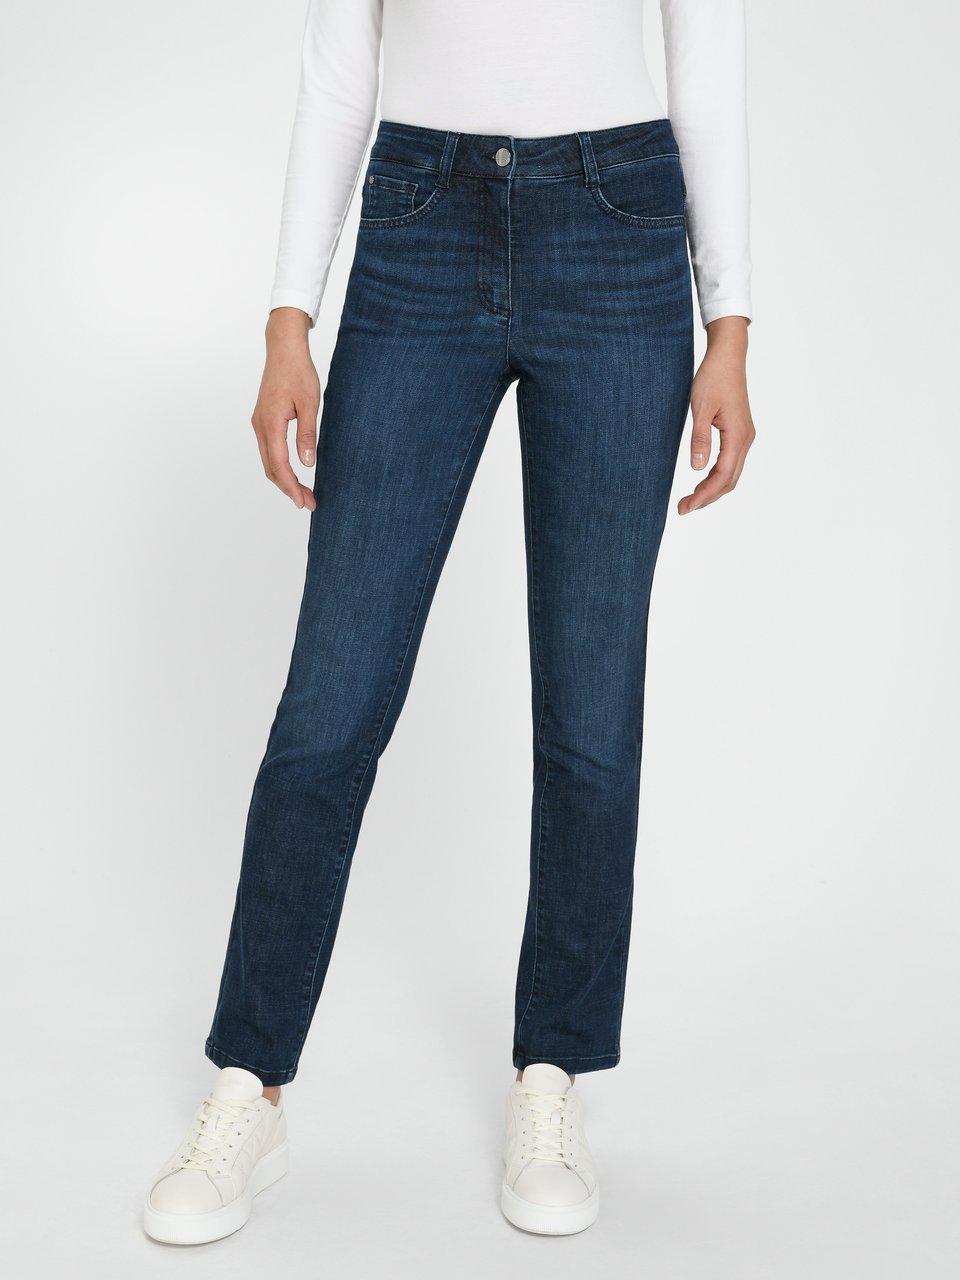 BASLER - Le jean coupe 5 poches